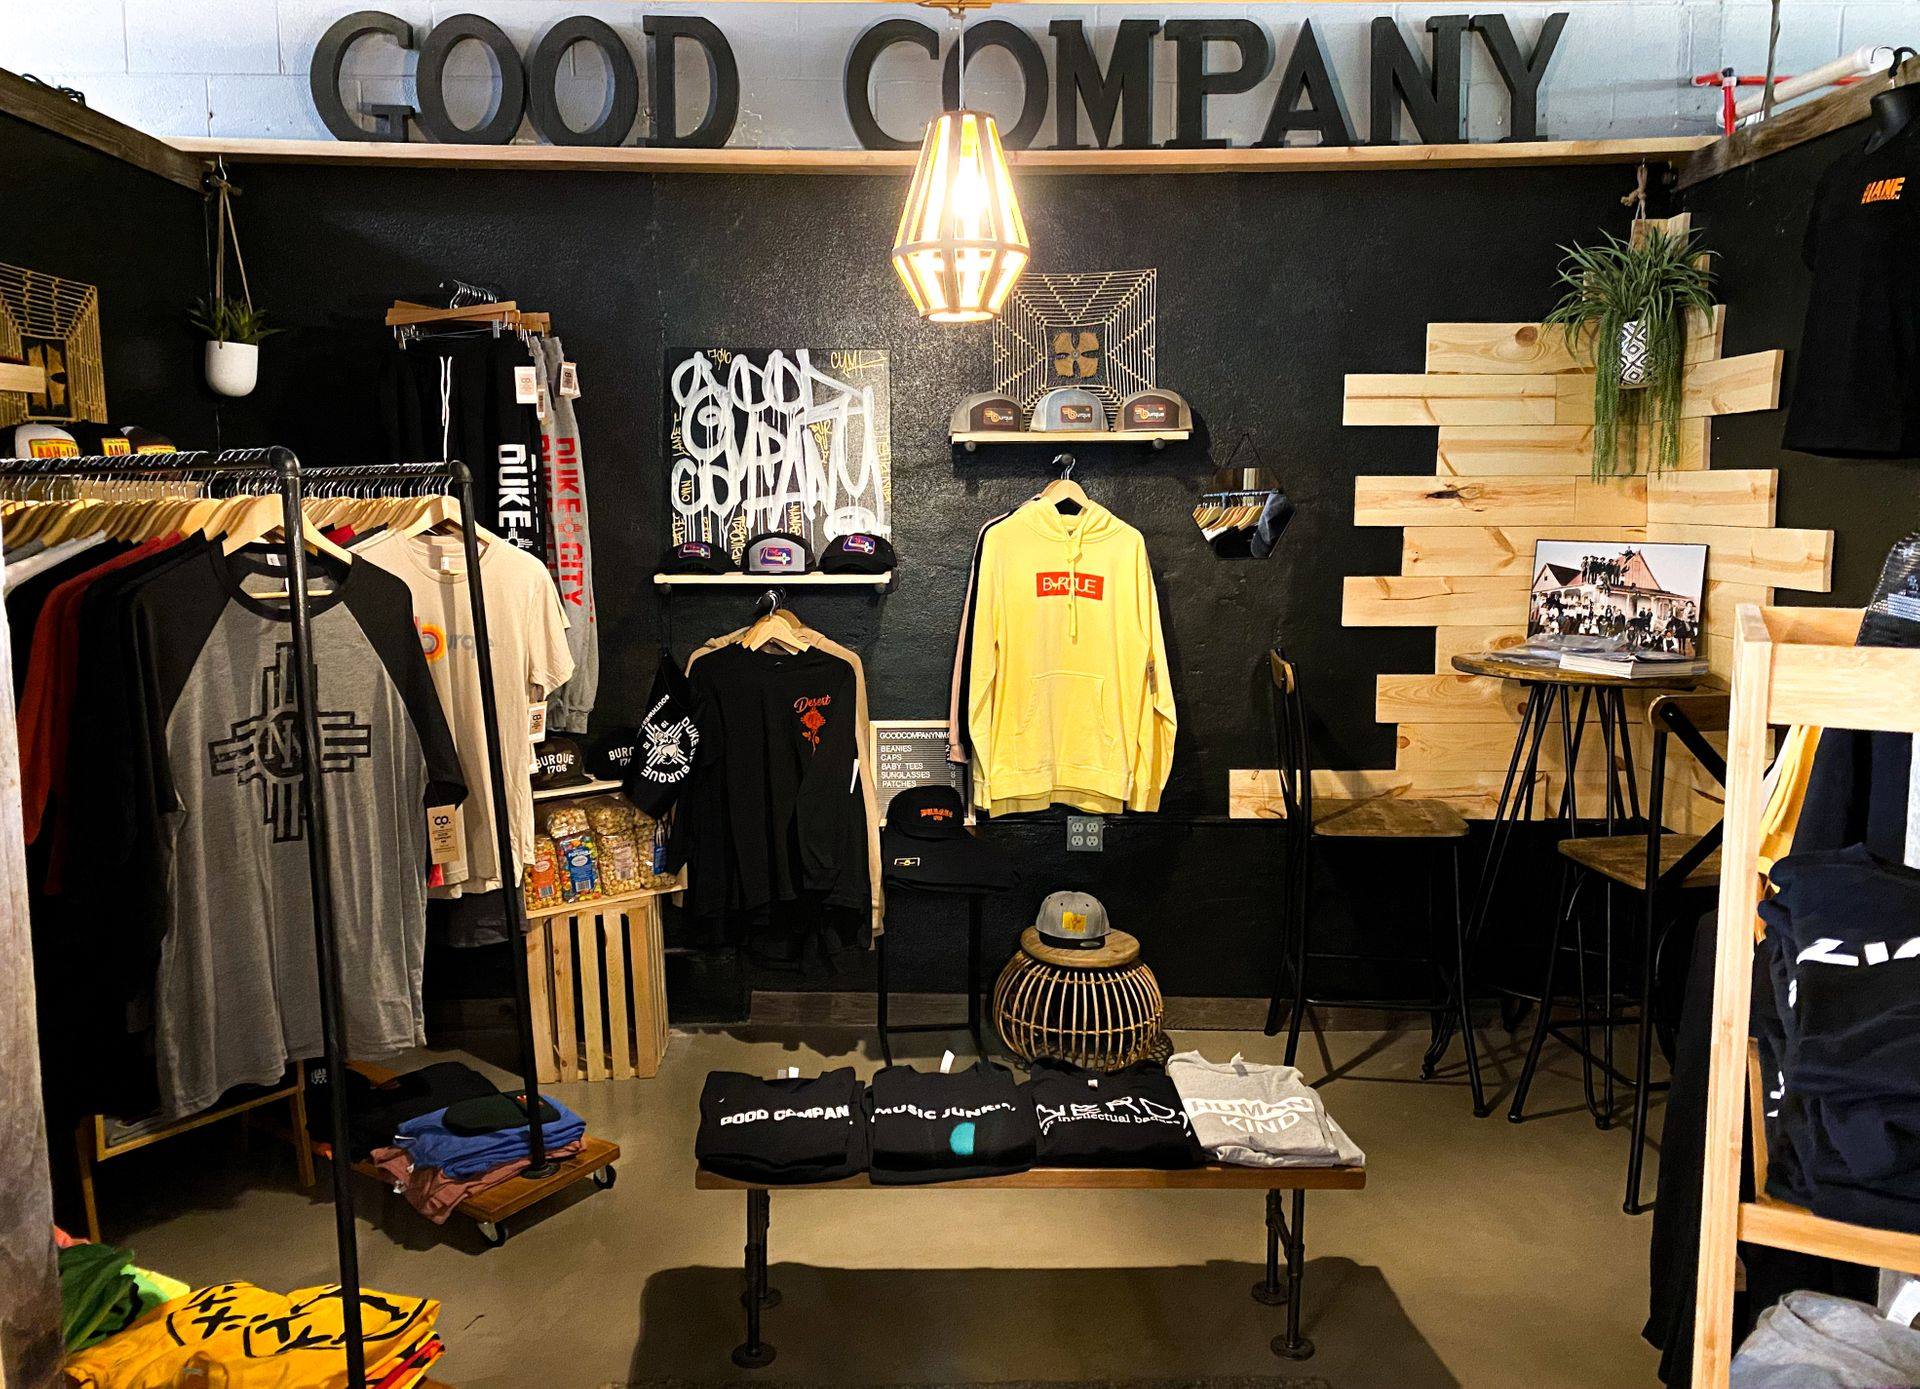 A photo inside the Good Company Store